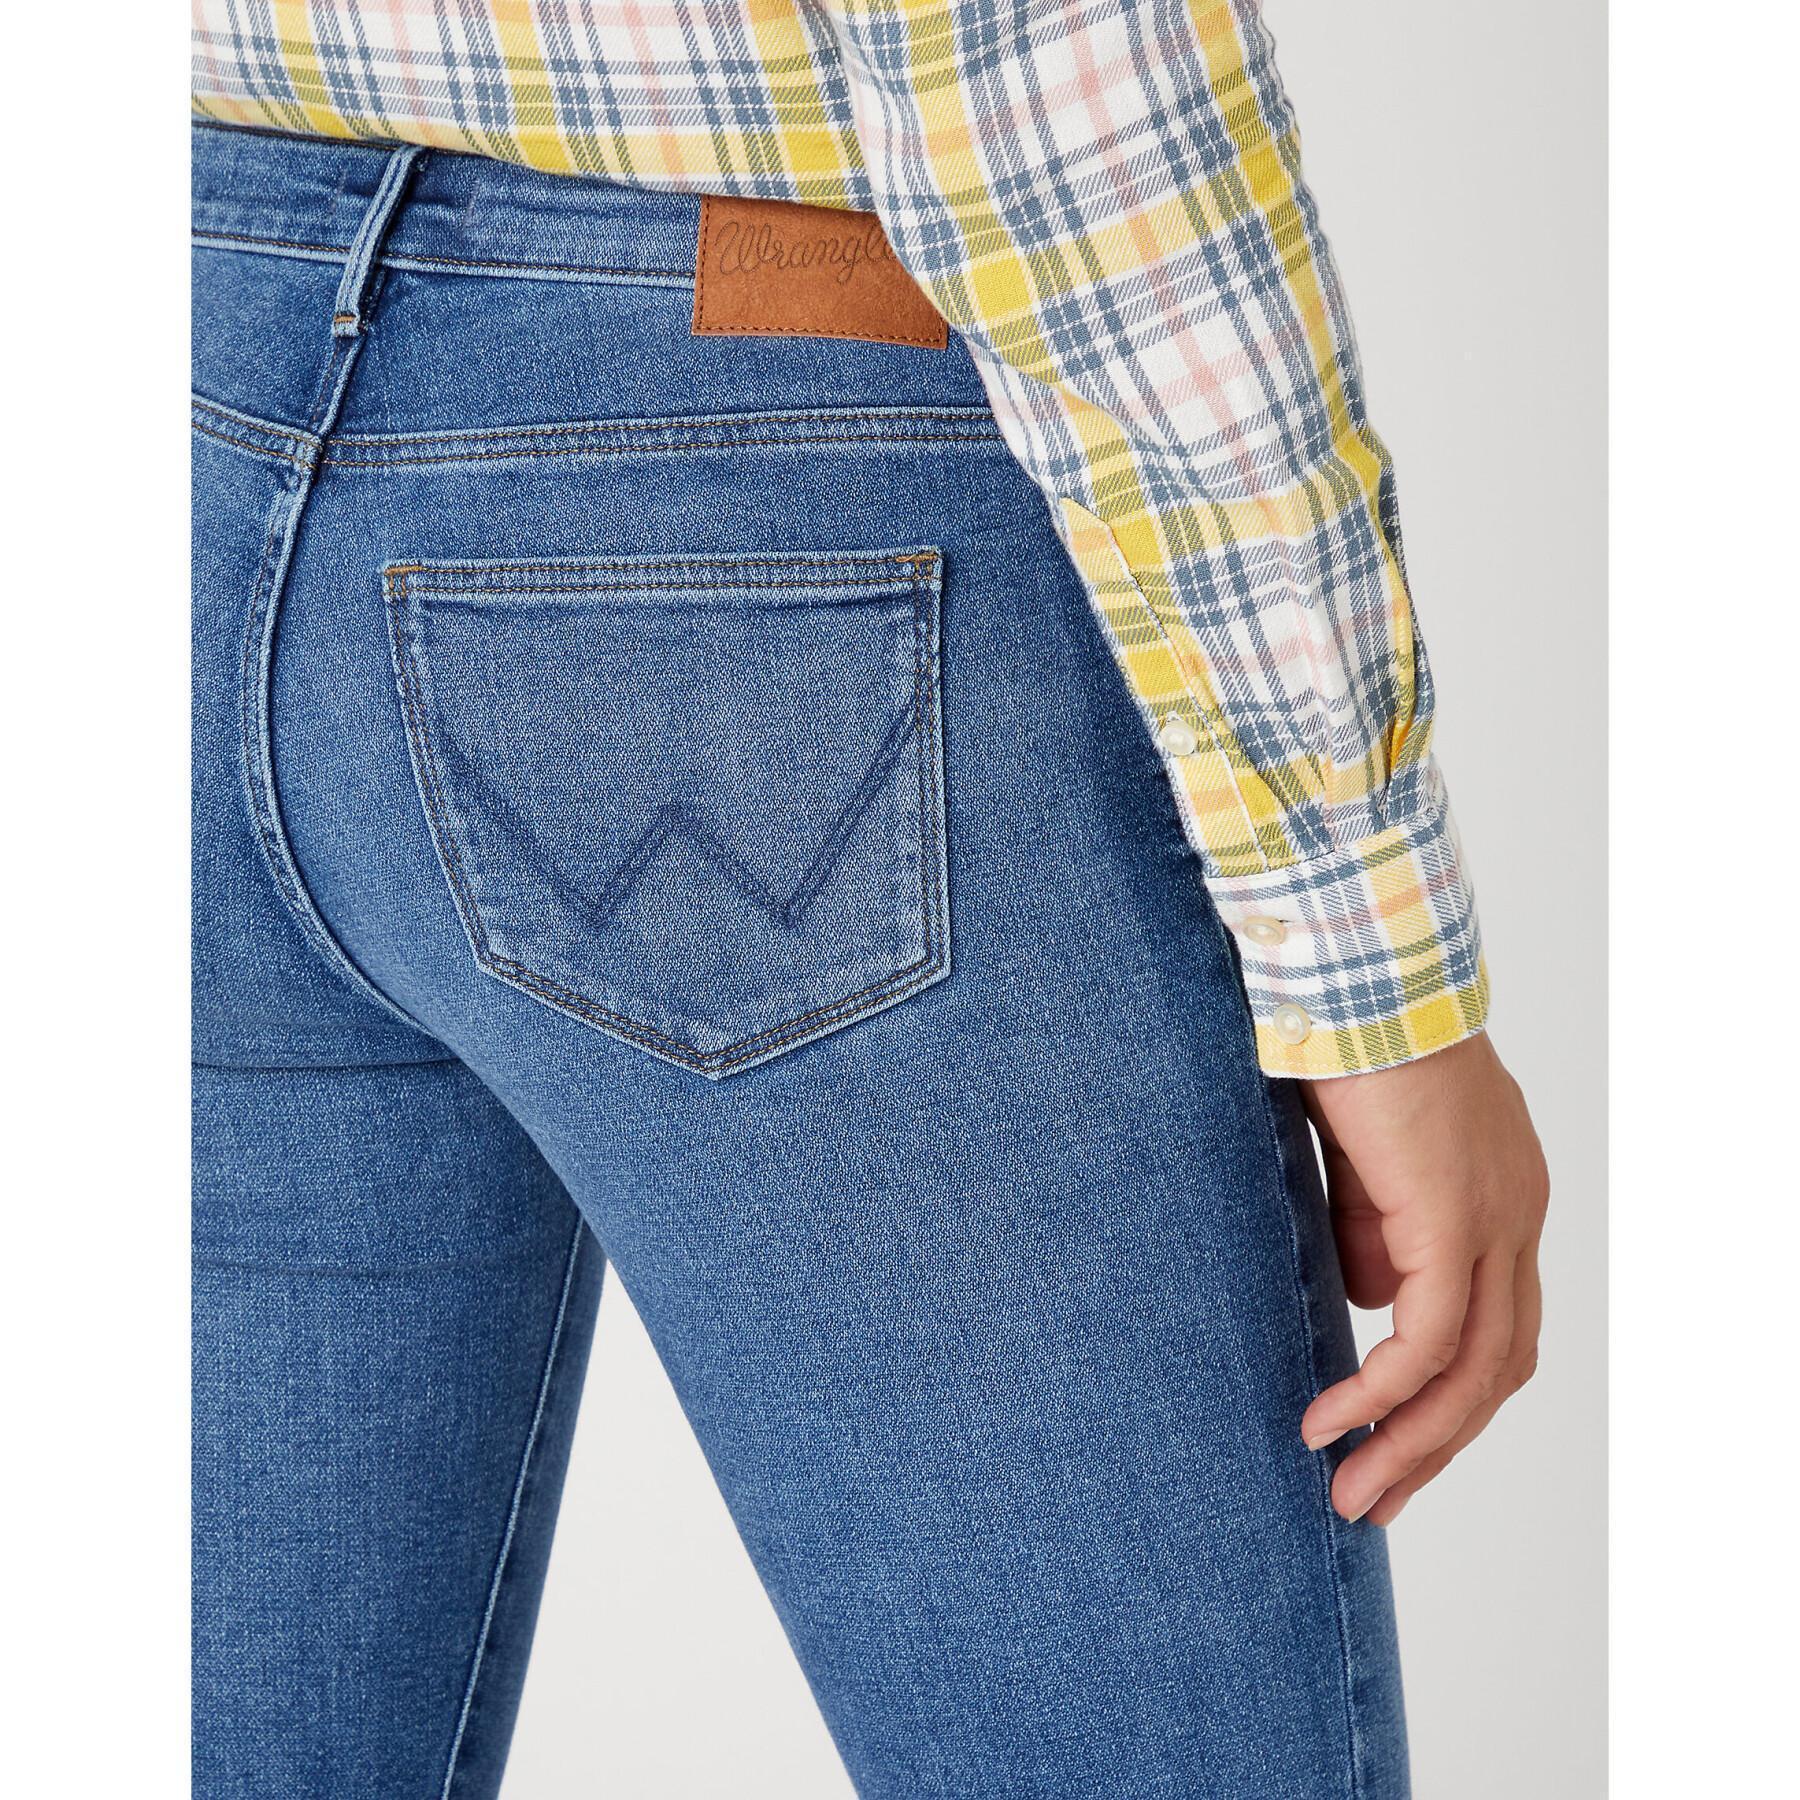 Jeans skinny frau Wrangler